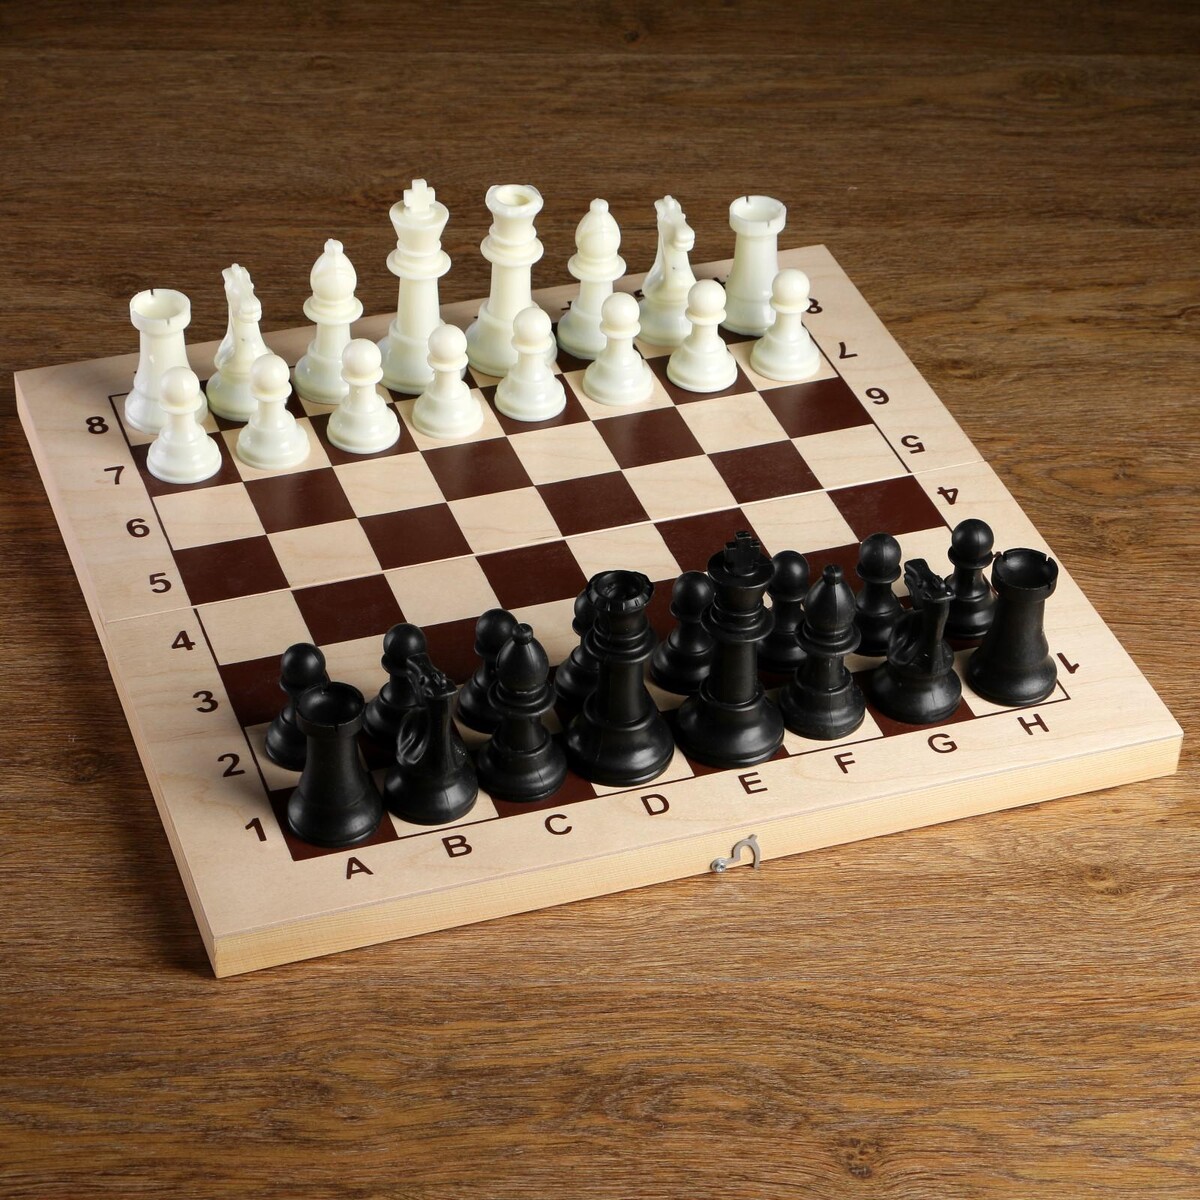 Шахматные фигуры, пластик, король h-10.5 см, пешка h-5 см железный король